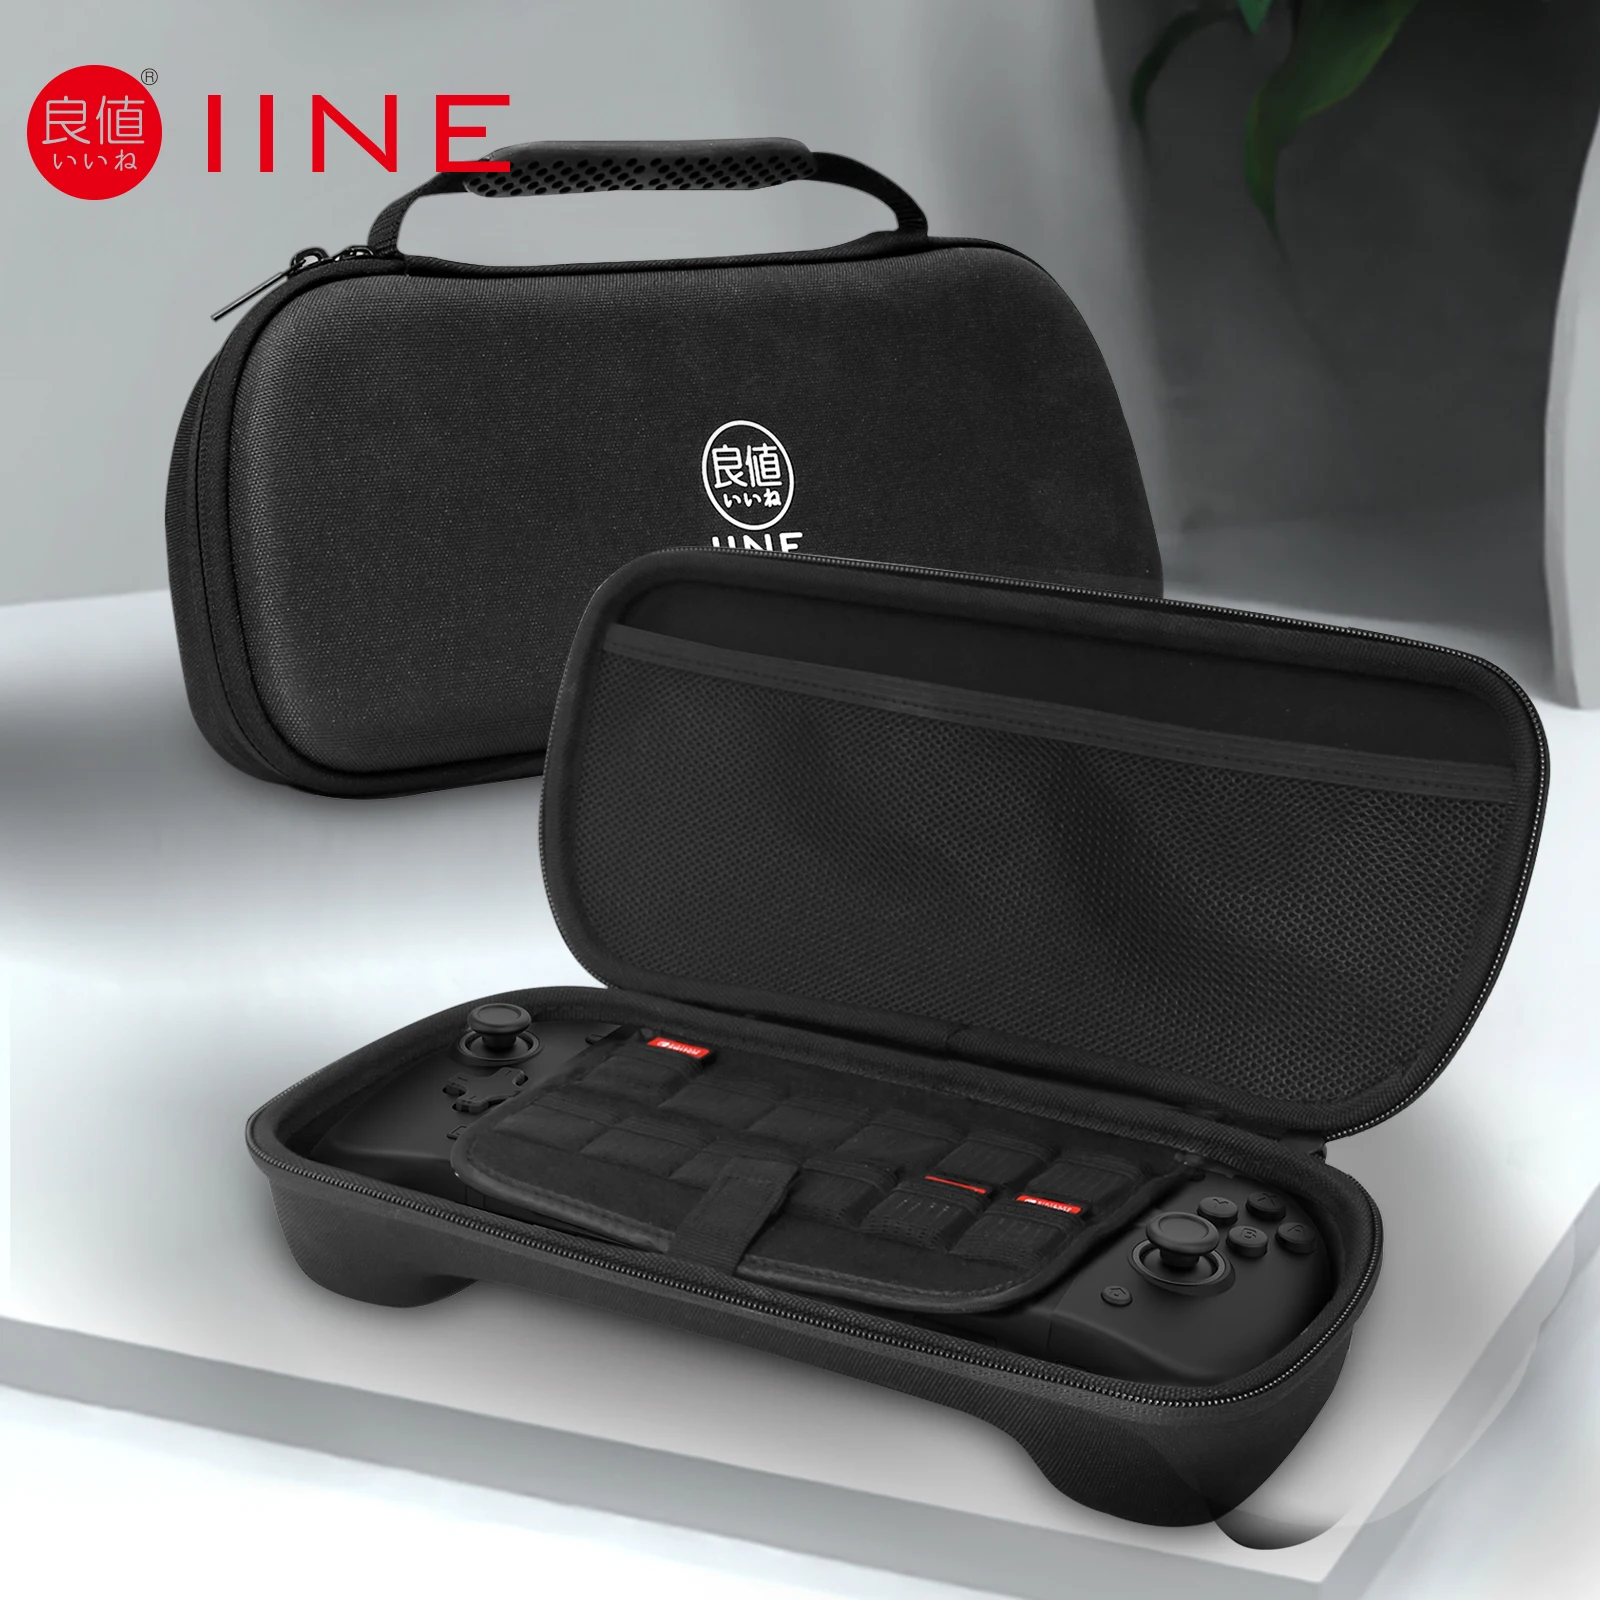 IINE Wake Up Controller Bag for Elite Joypad Arceus Series